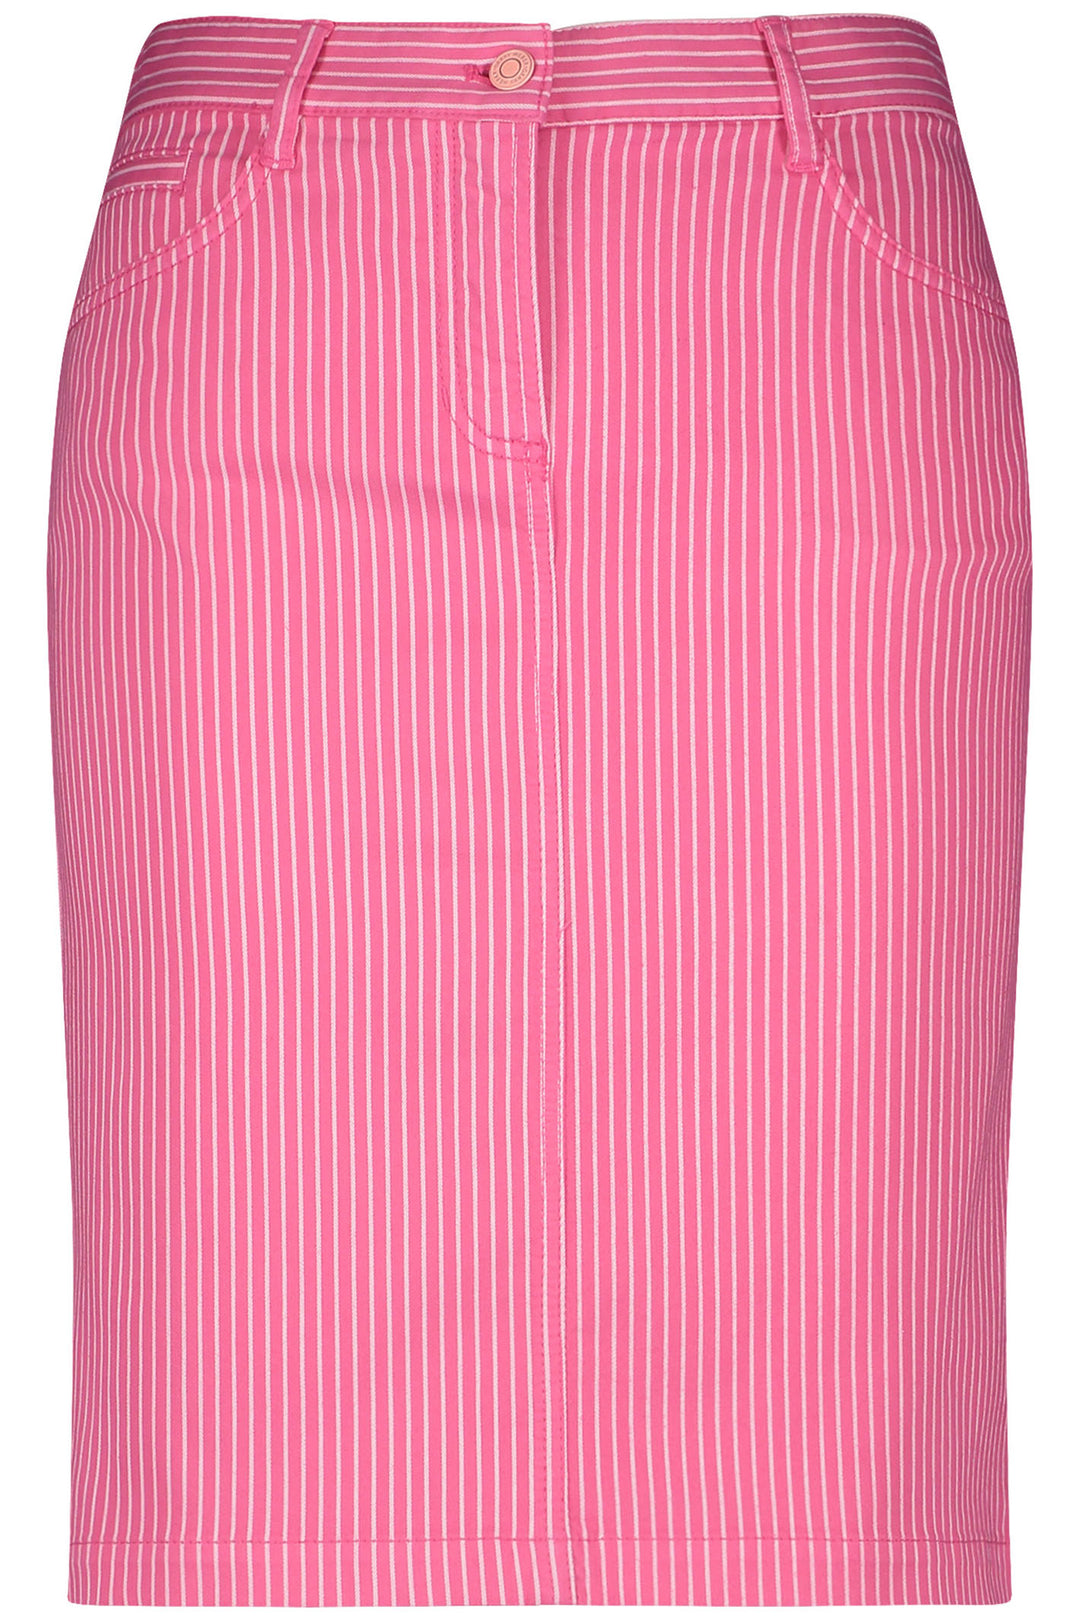 Gerry Weber 211027 Pink Stripe Denim Skirt - Experience Boutique